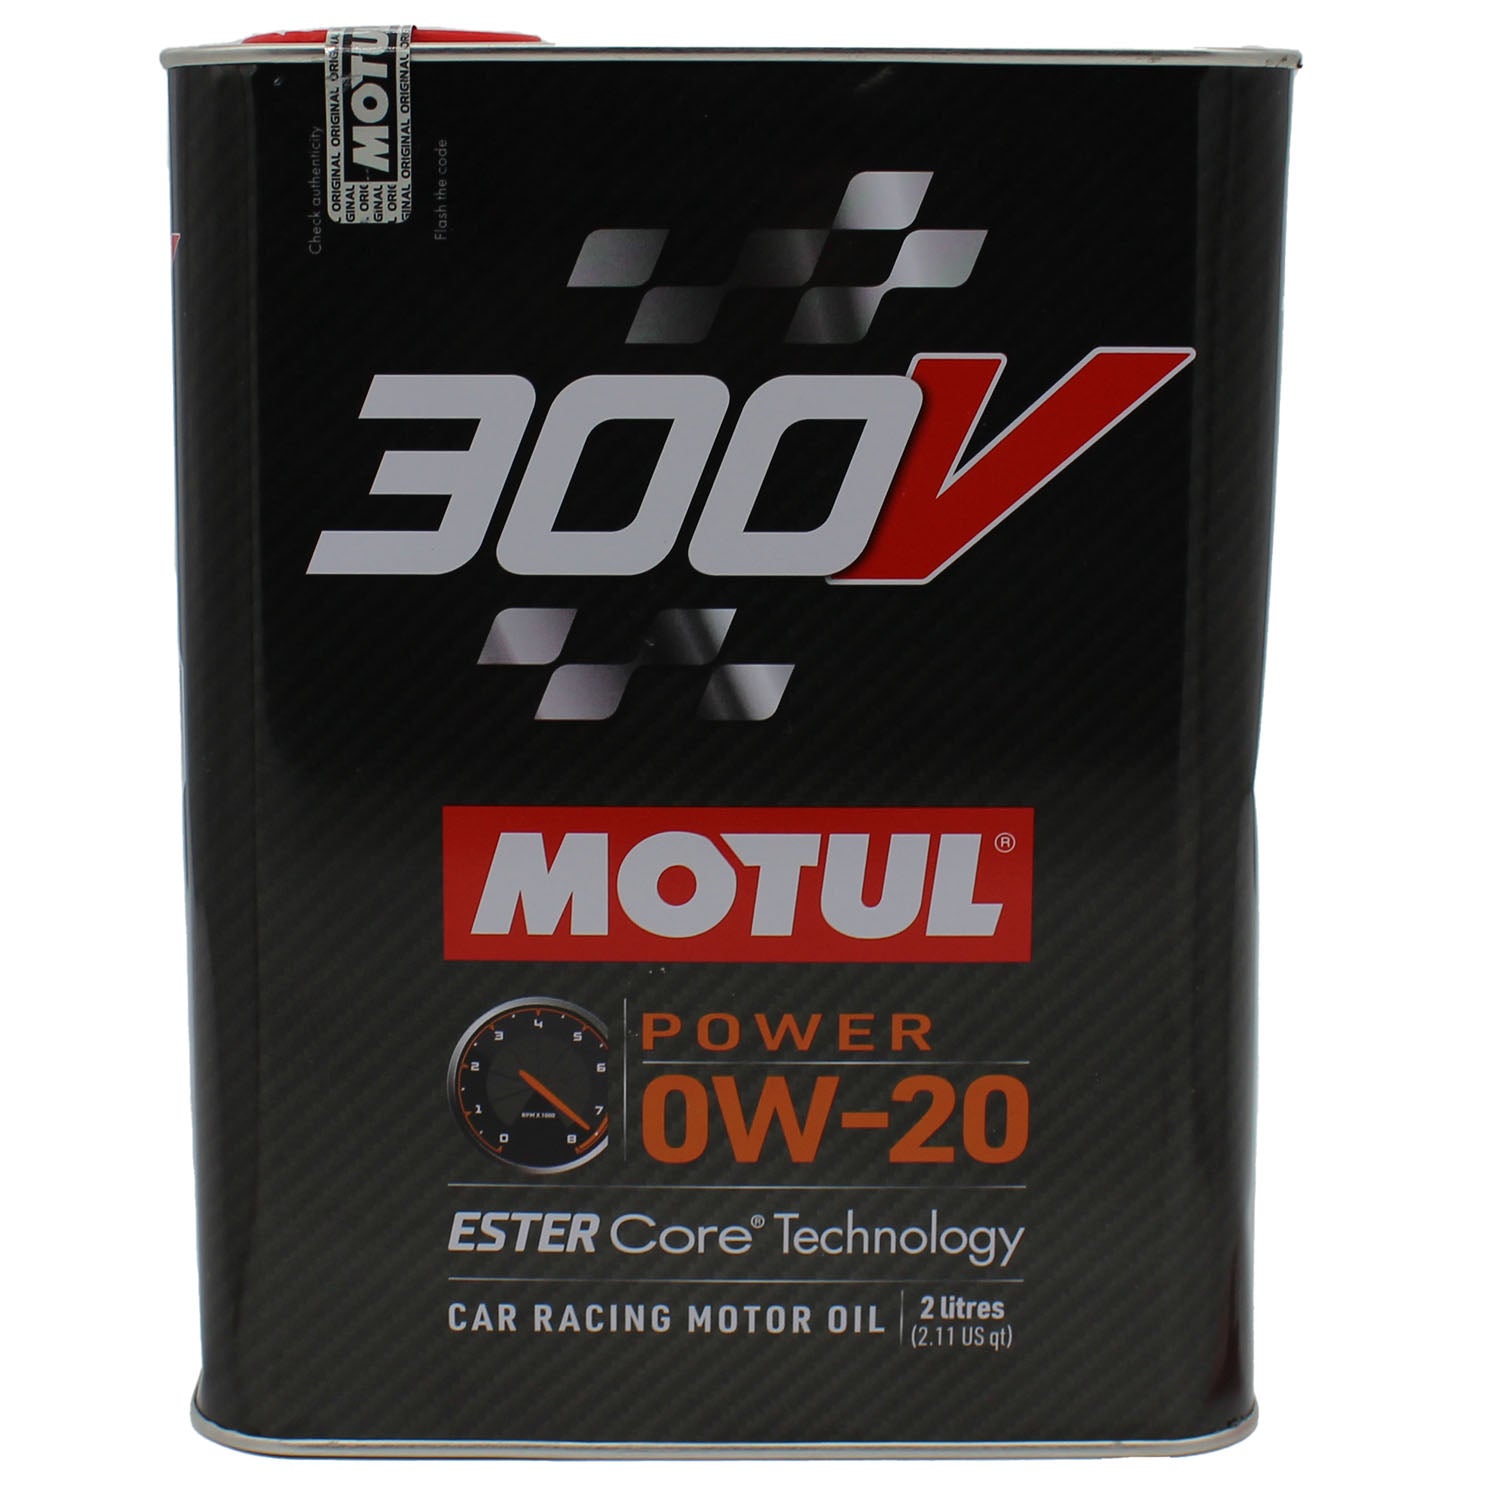 Motul 300V Power Car Racing Motor Oil 0W-20 - 2 Liter